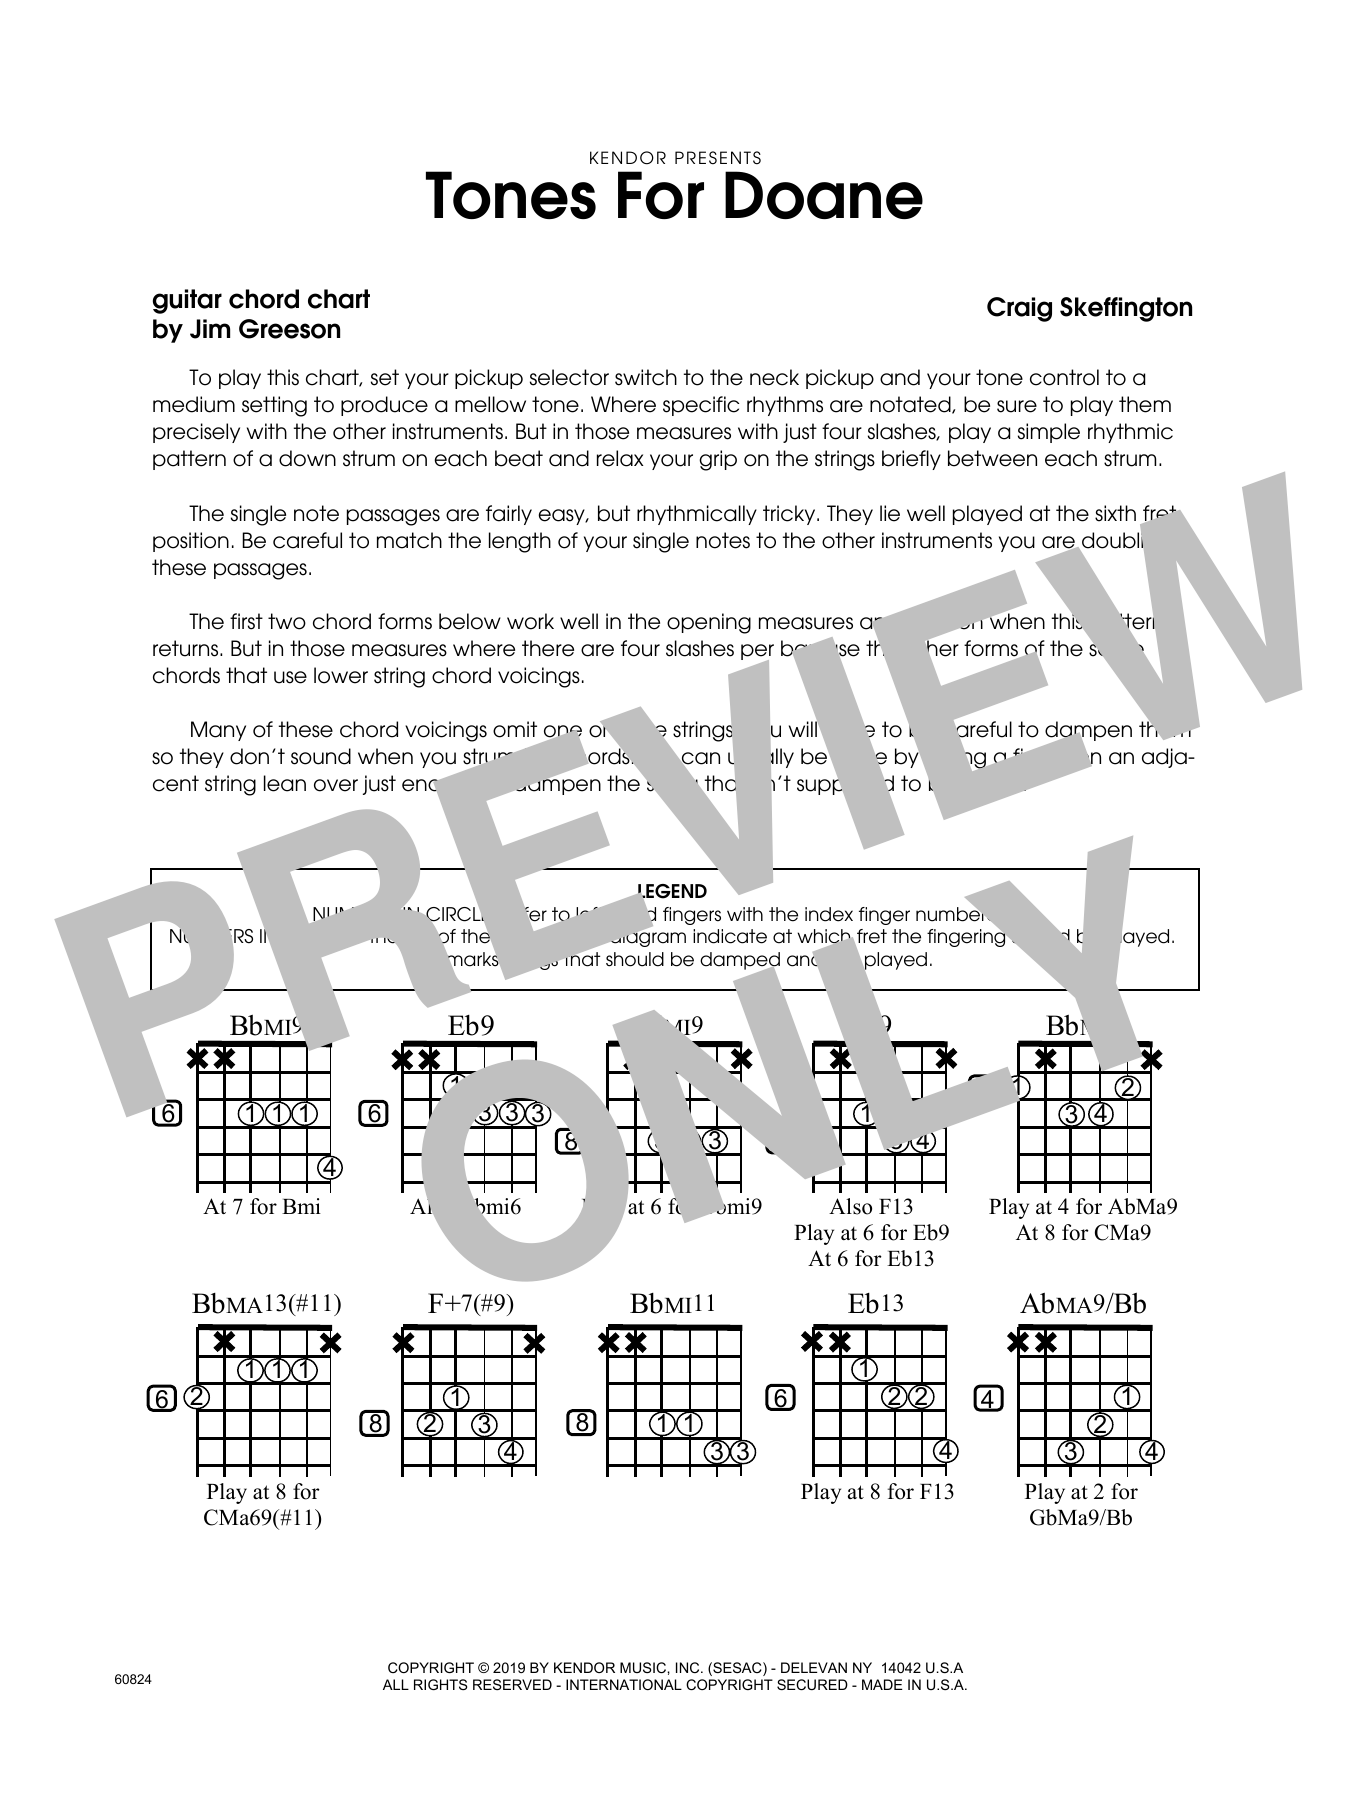 Download Craig Skeffington Tones For Doane - Guitar Chord Chart Sheet Music